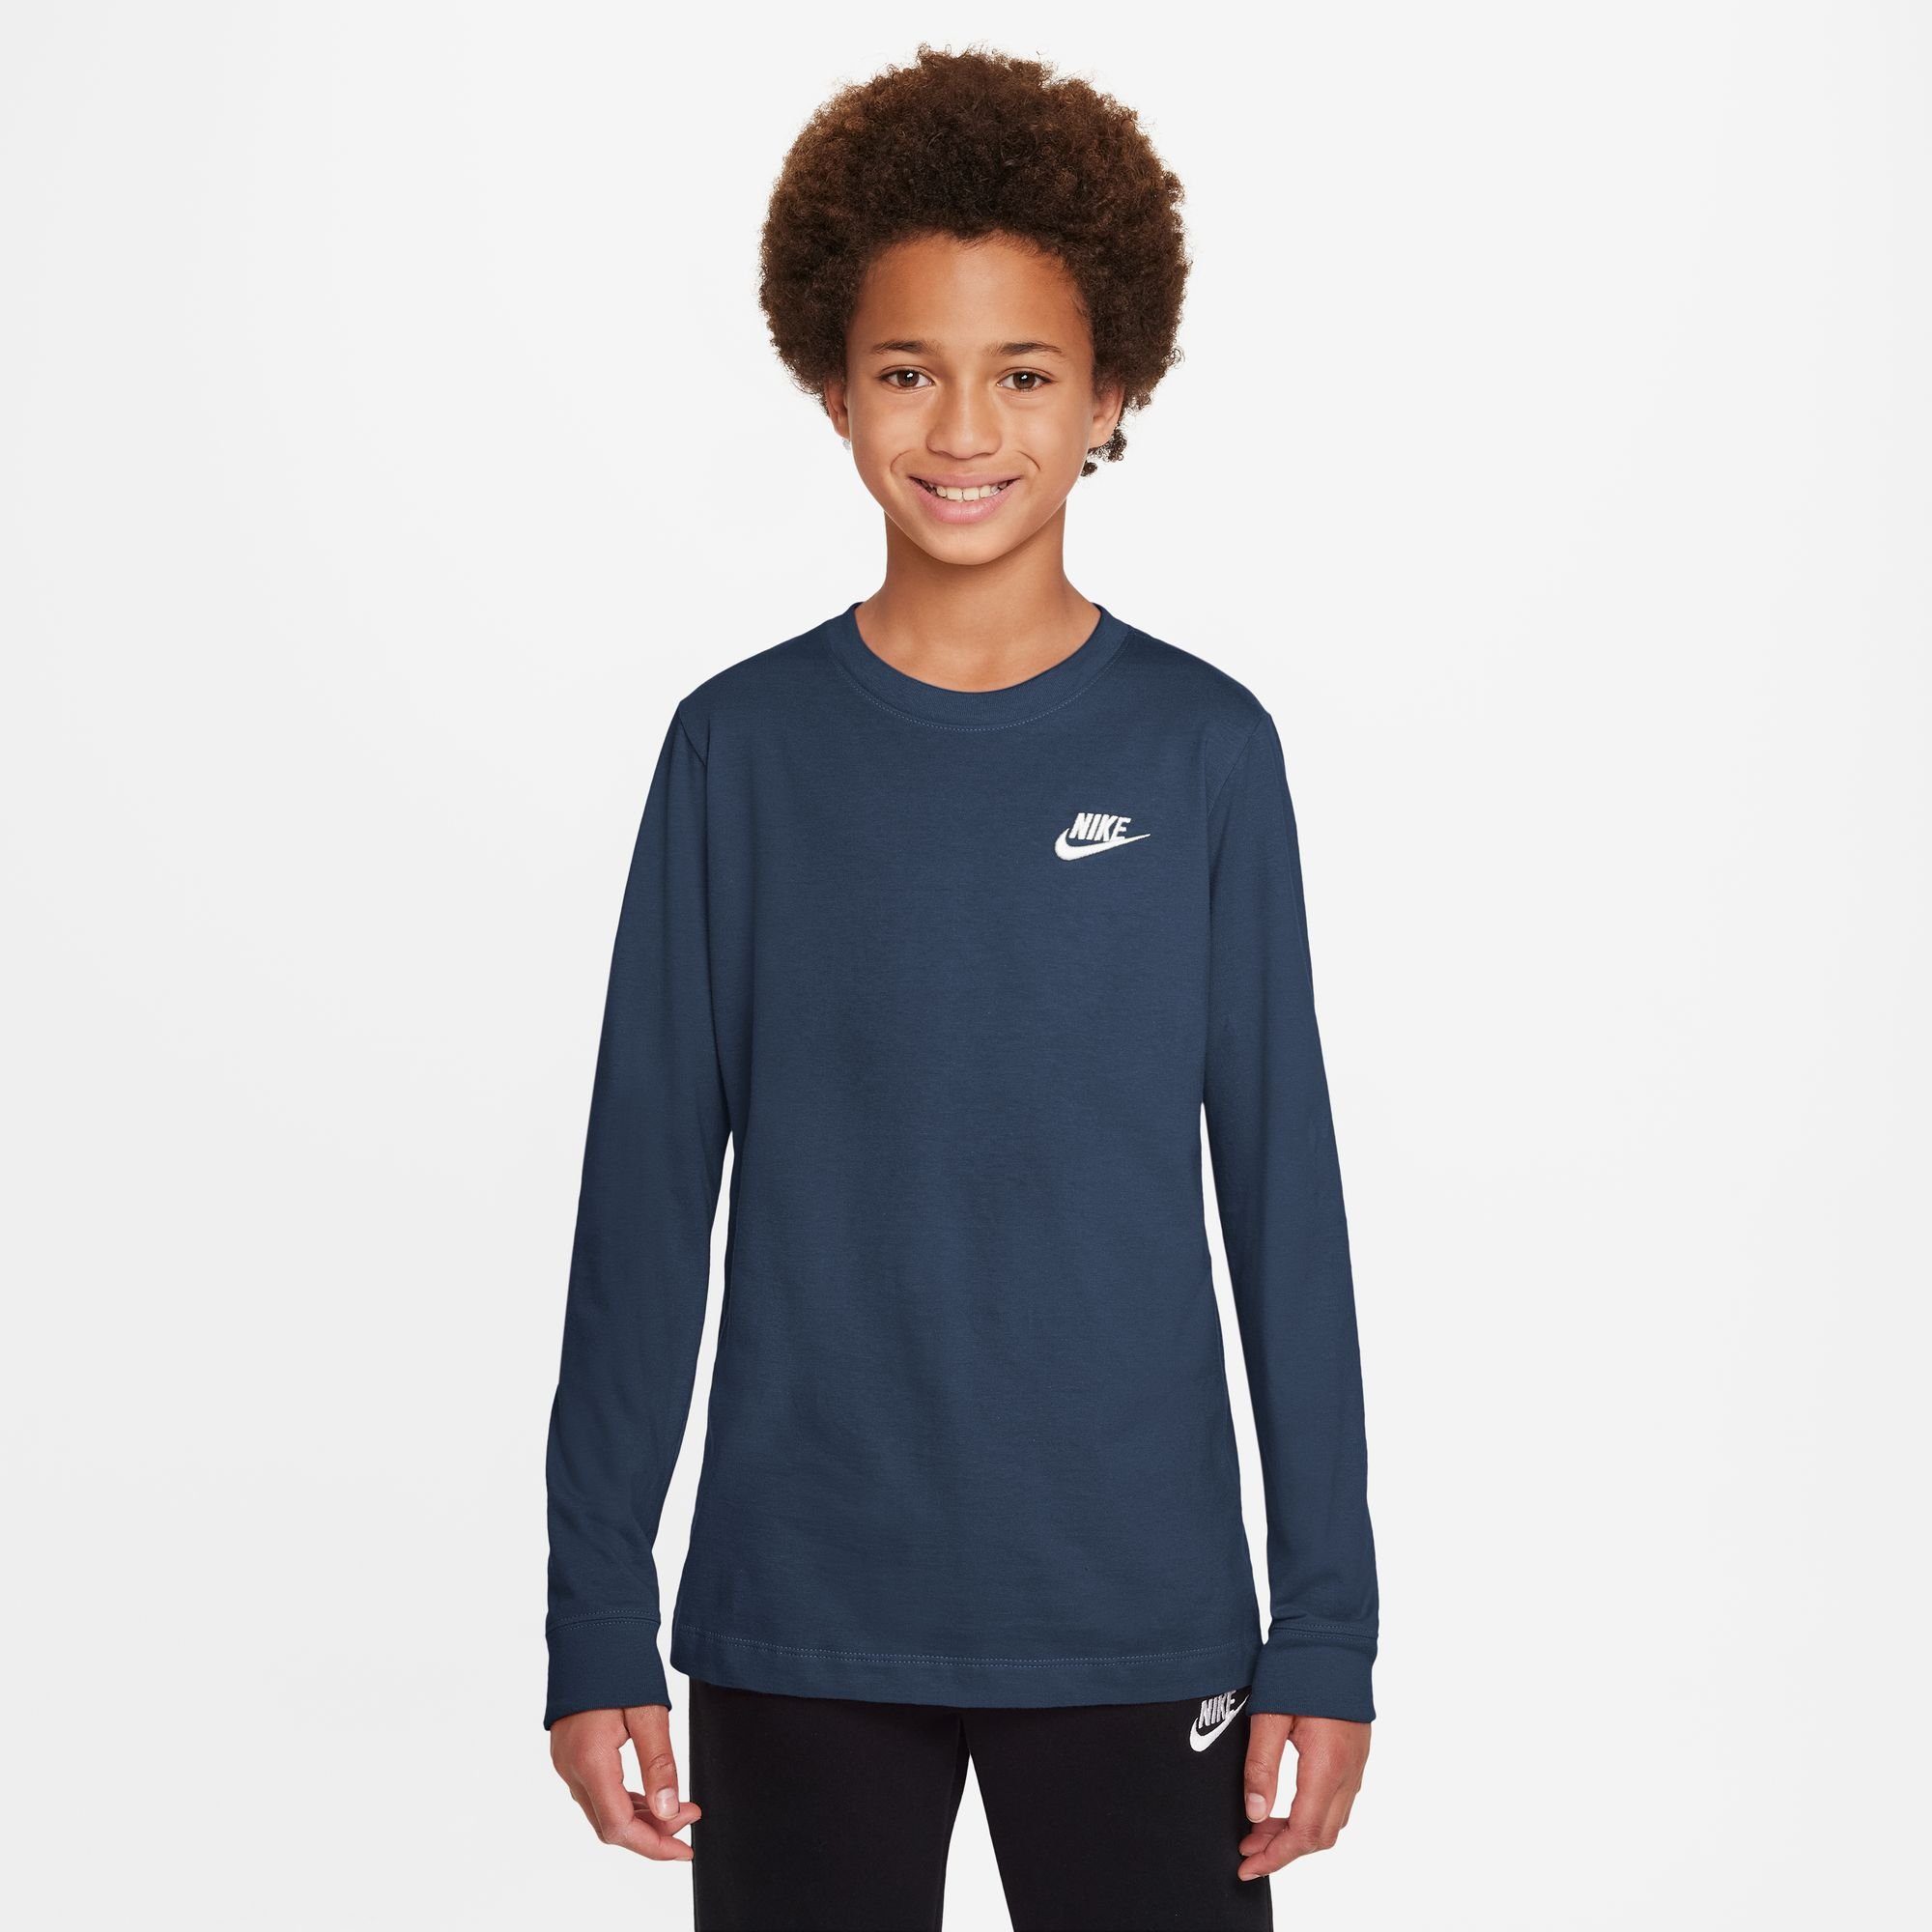 NAVY/WHITE MIDNIGHT Langarmshirt (BOYS) LONG-SLEEVE KIDS' Nike BIG Sportswear T-SHIRT